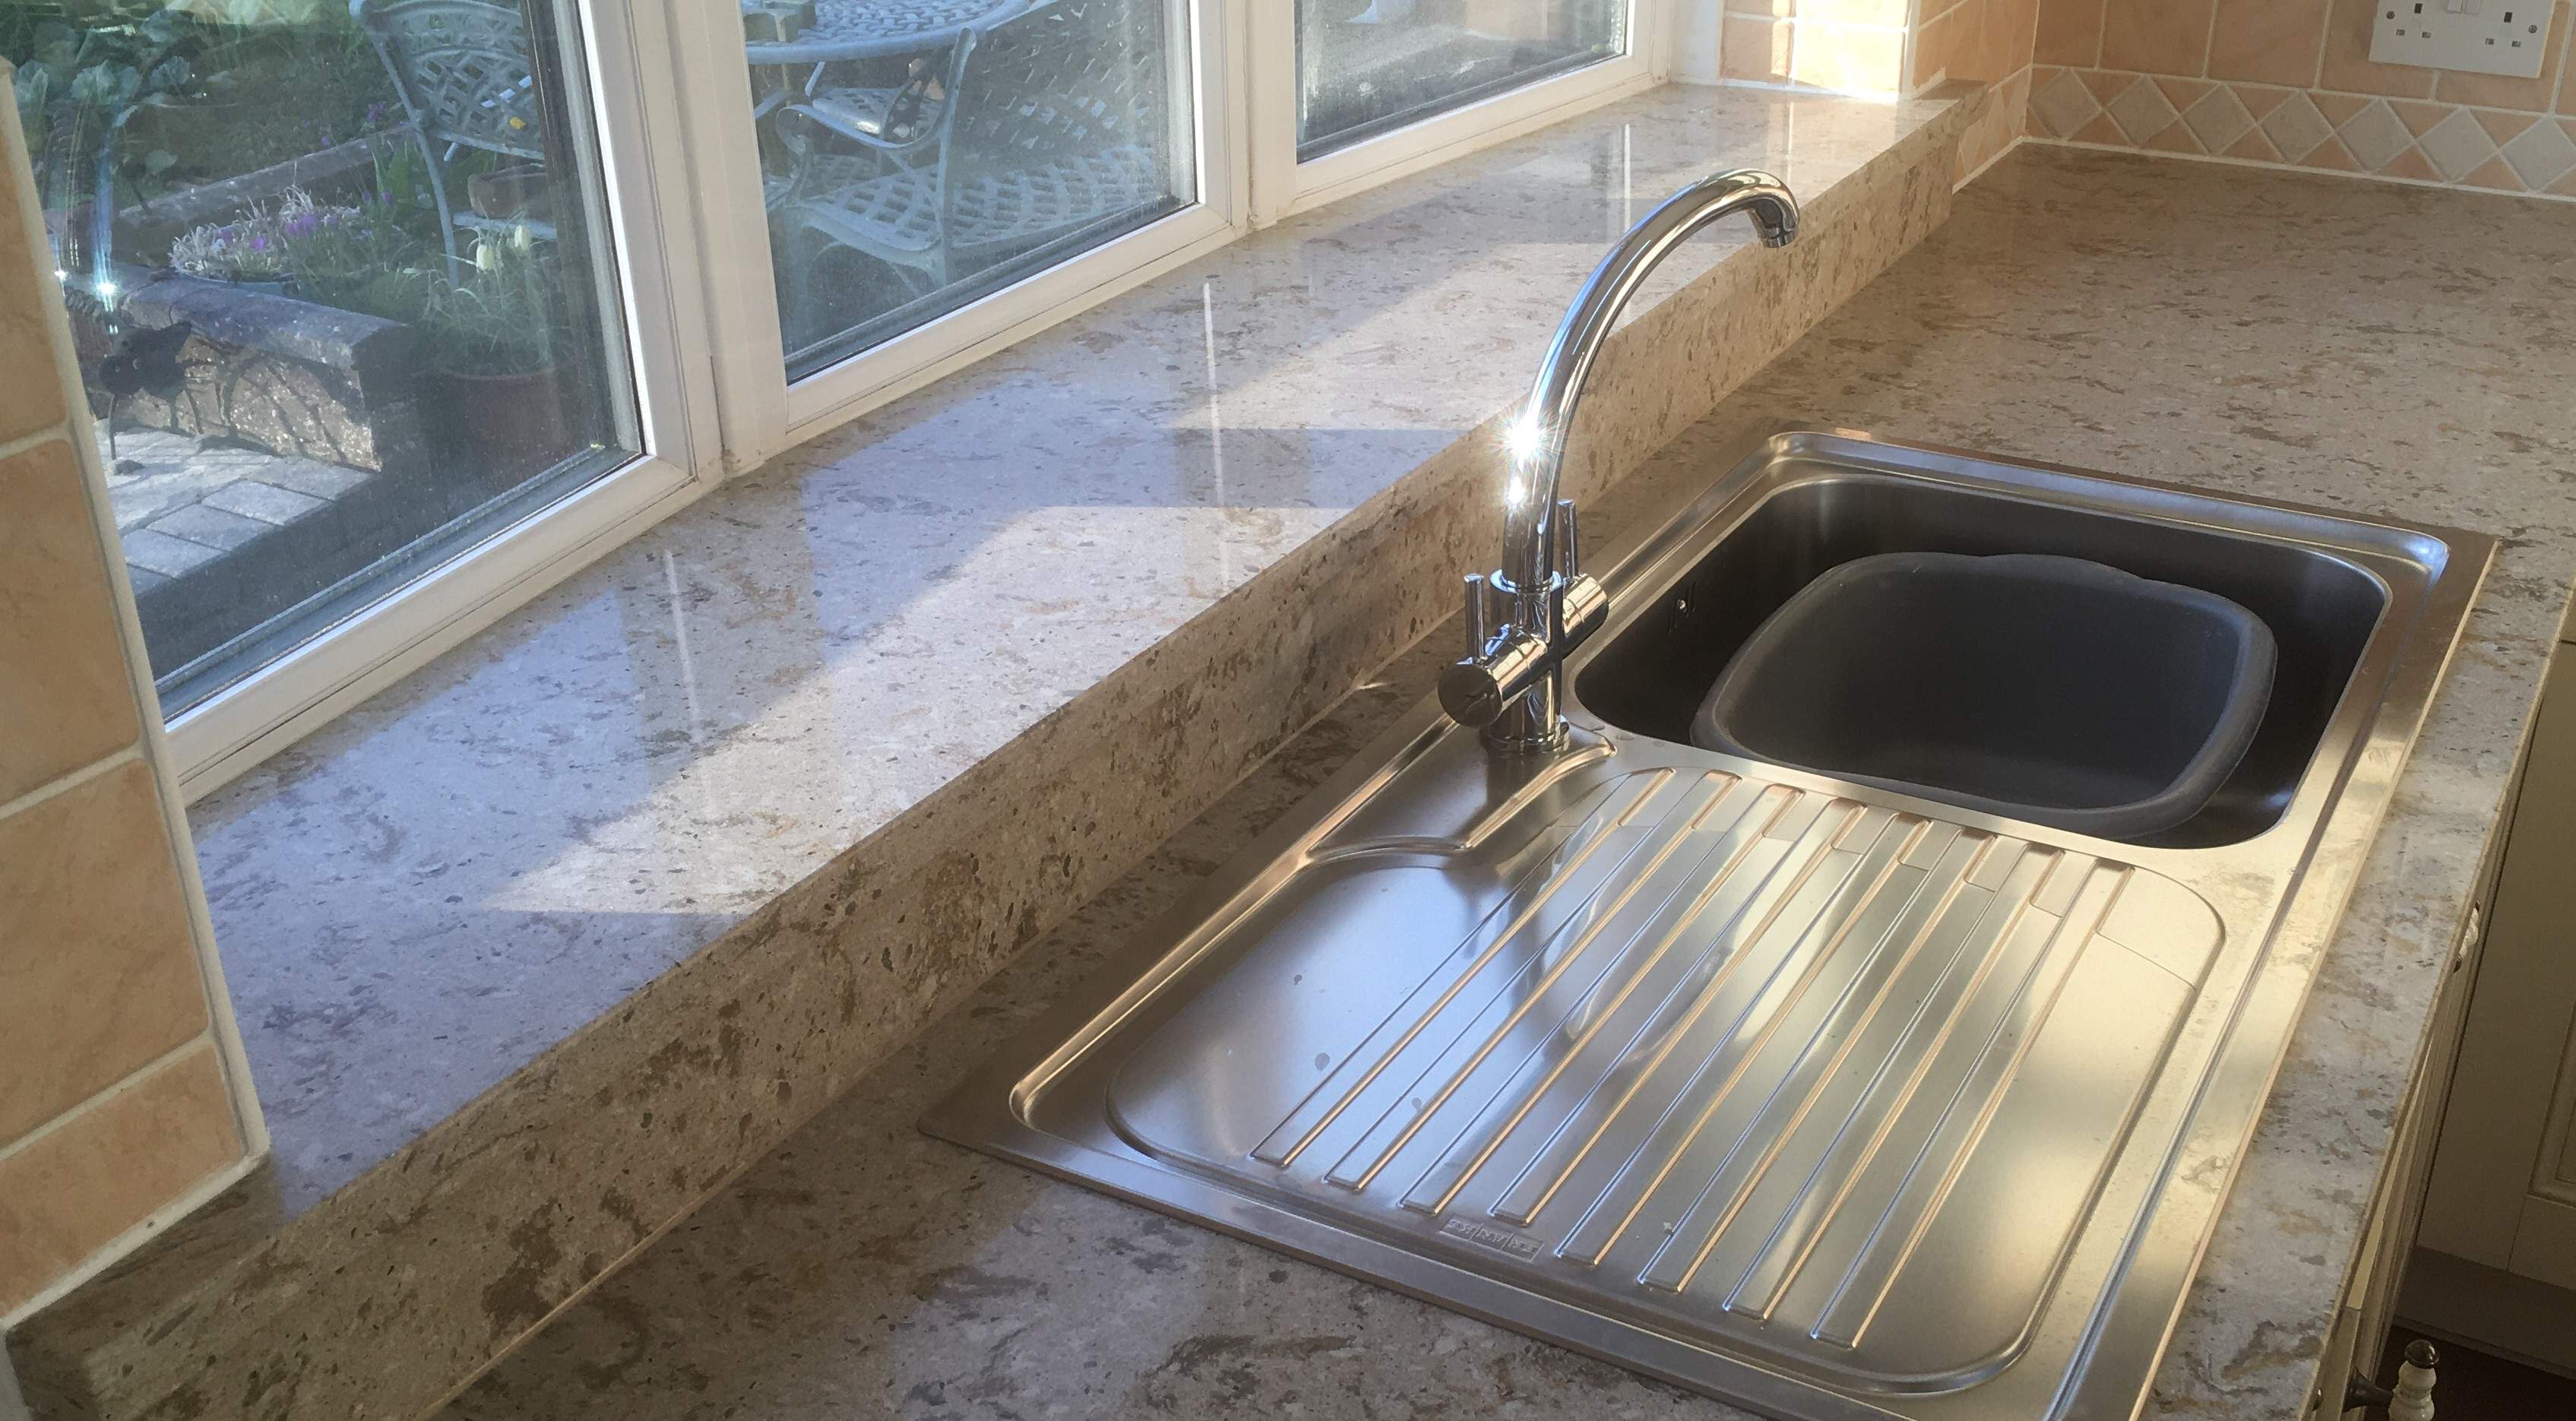 Rreplacement sink on granite worktops